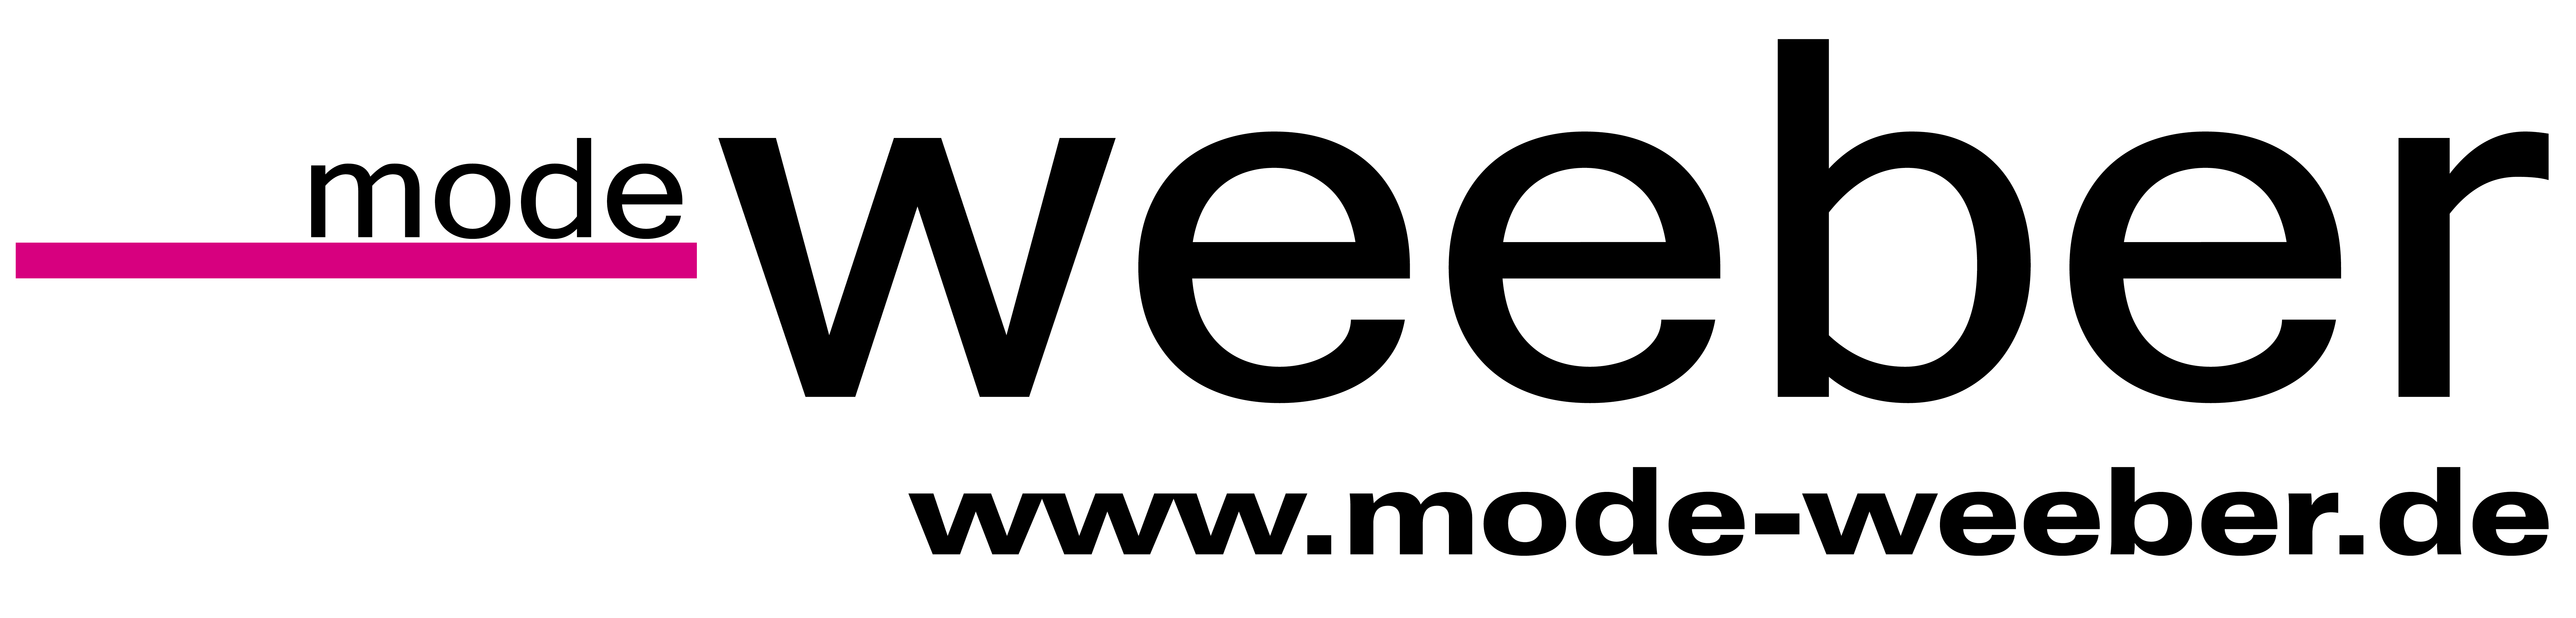 Mode-Weeber